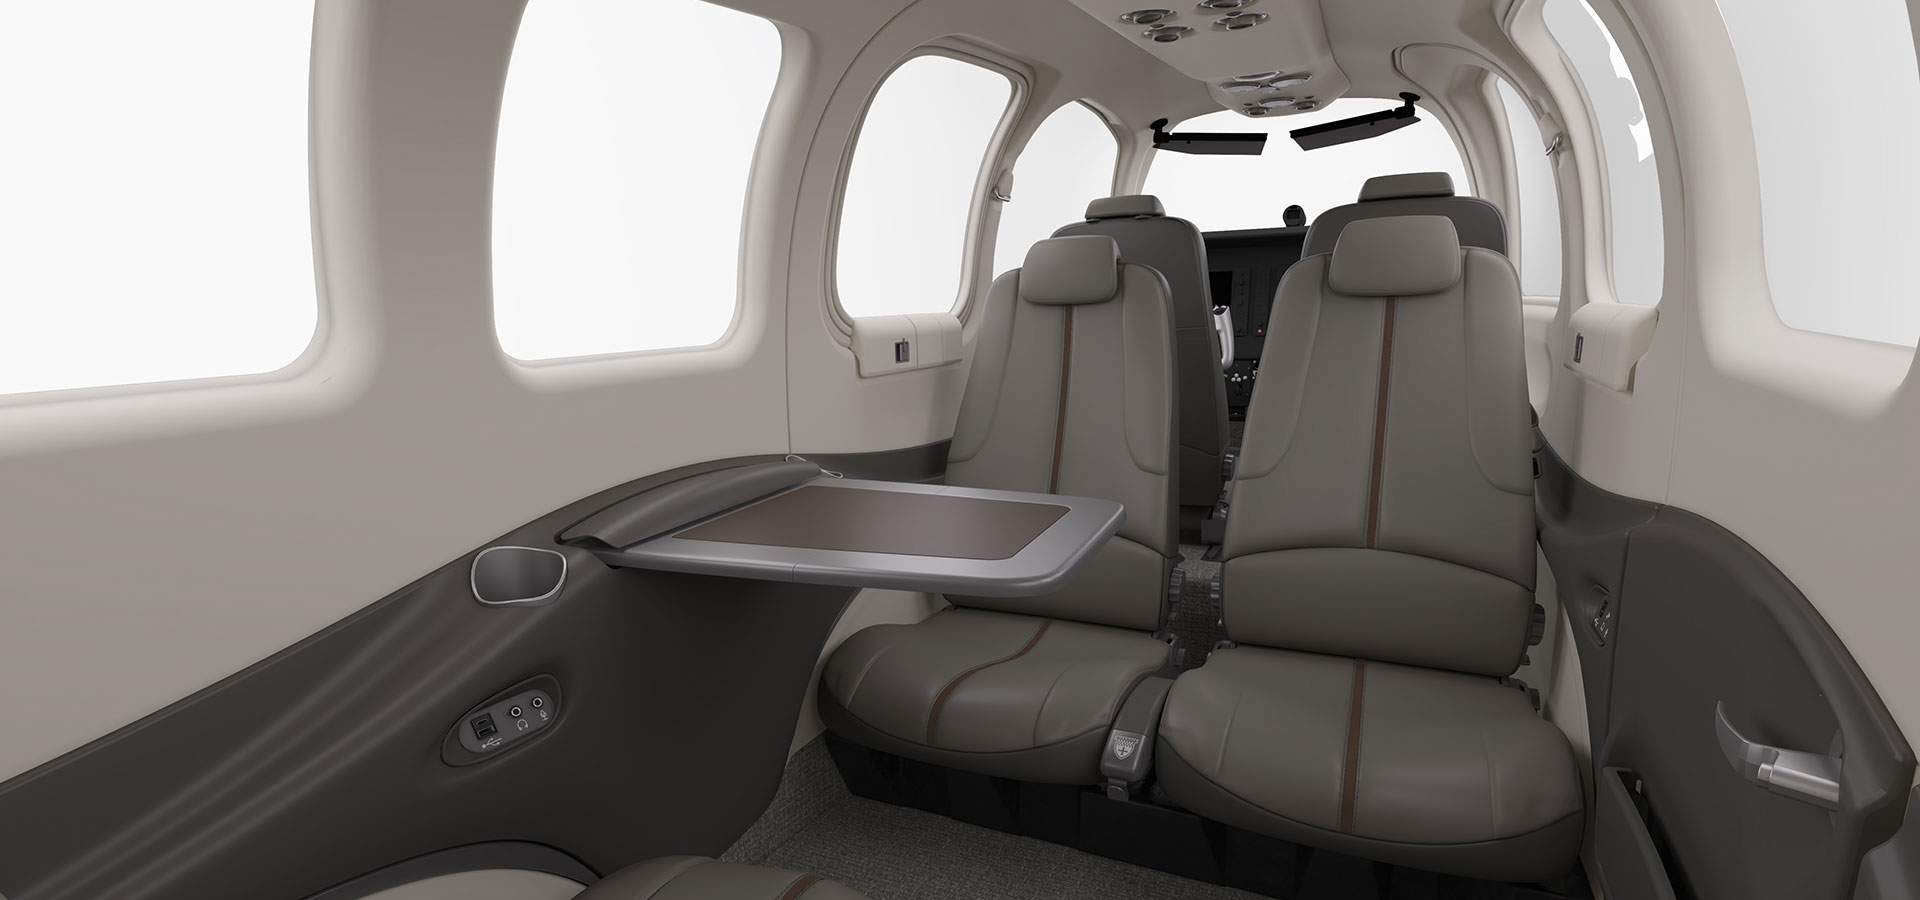 Beechcraft Baron 58 Private Jet Charter interior